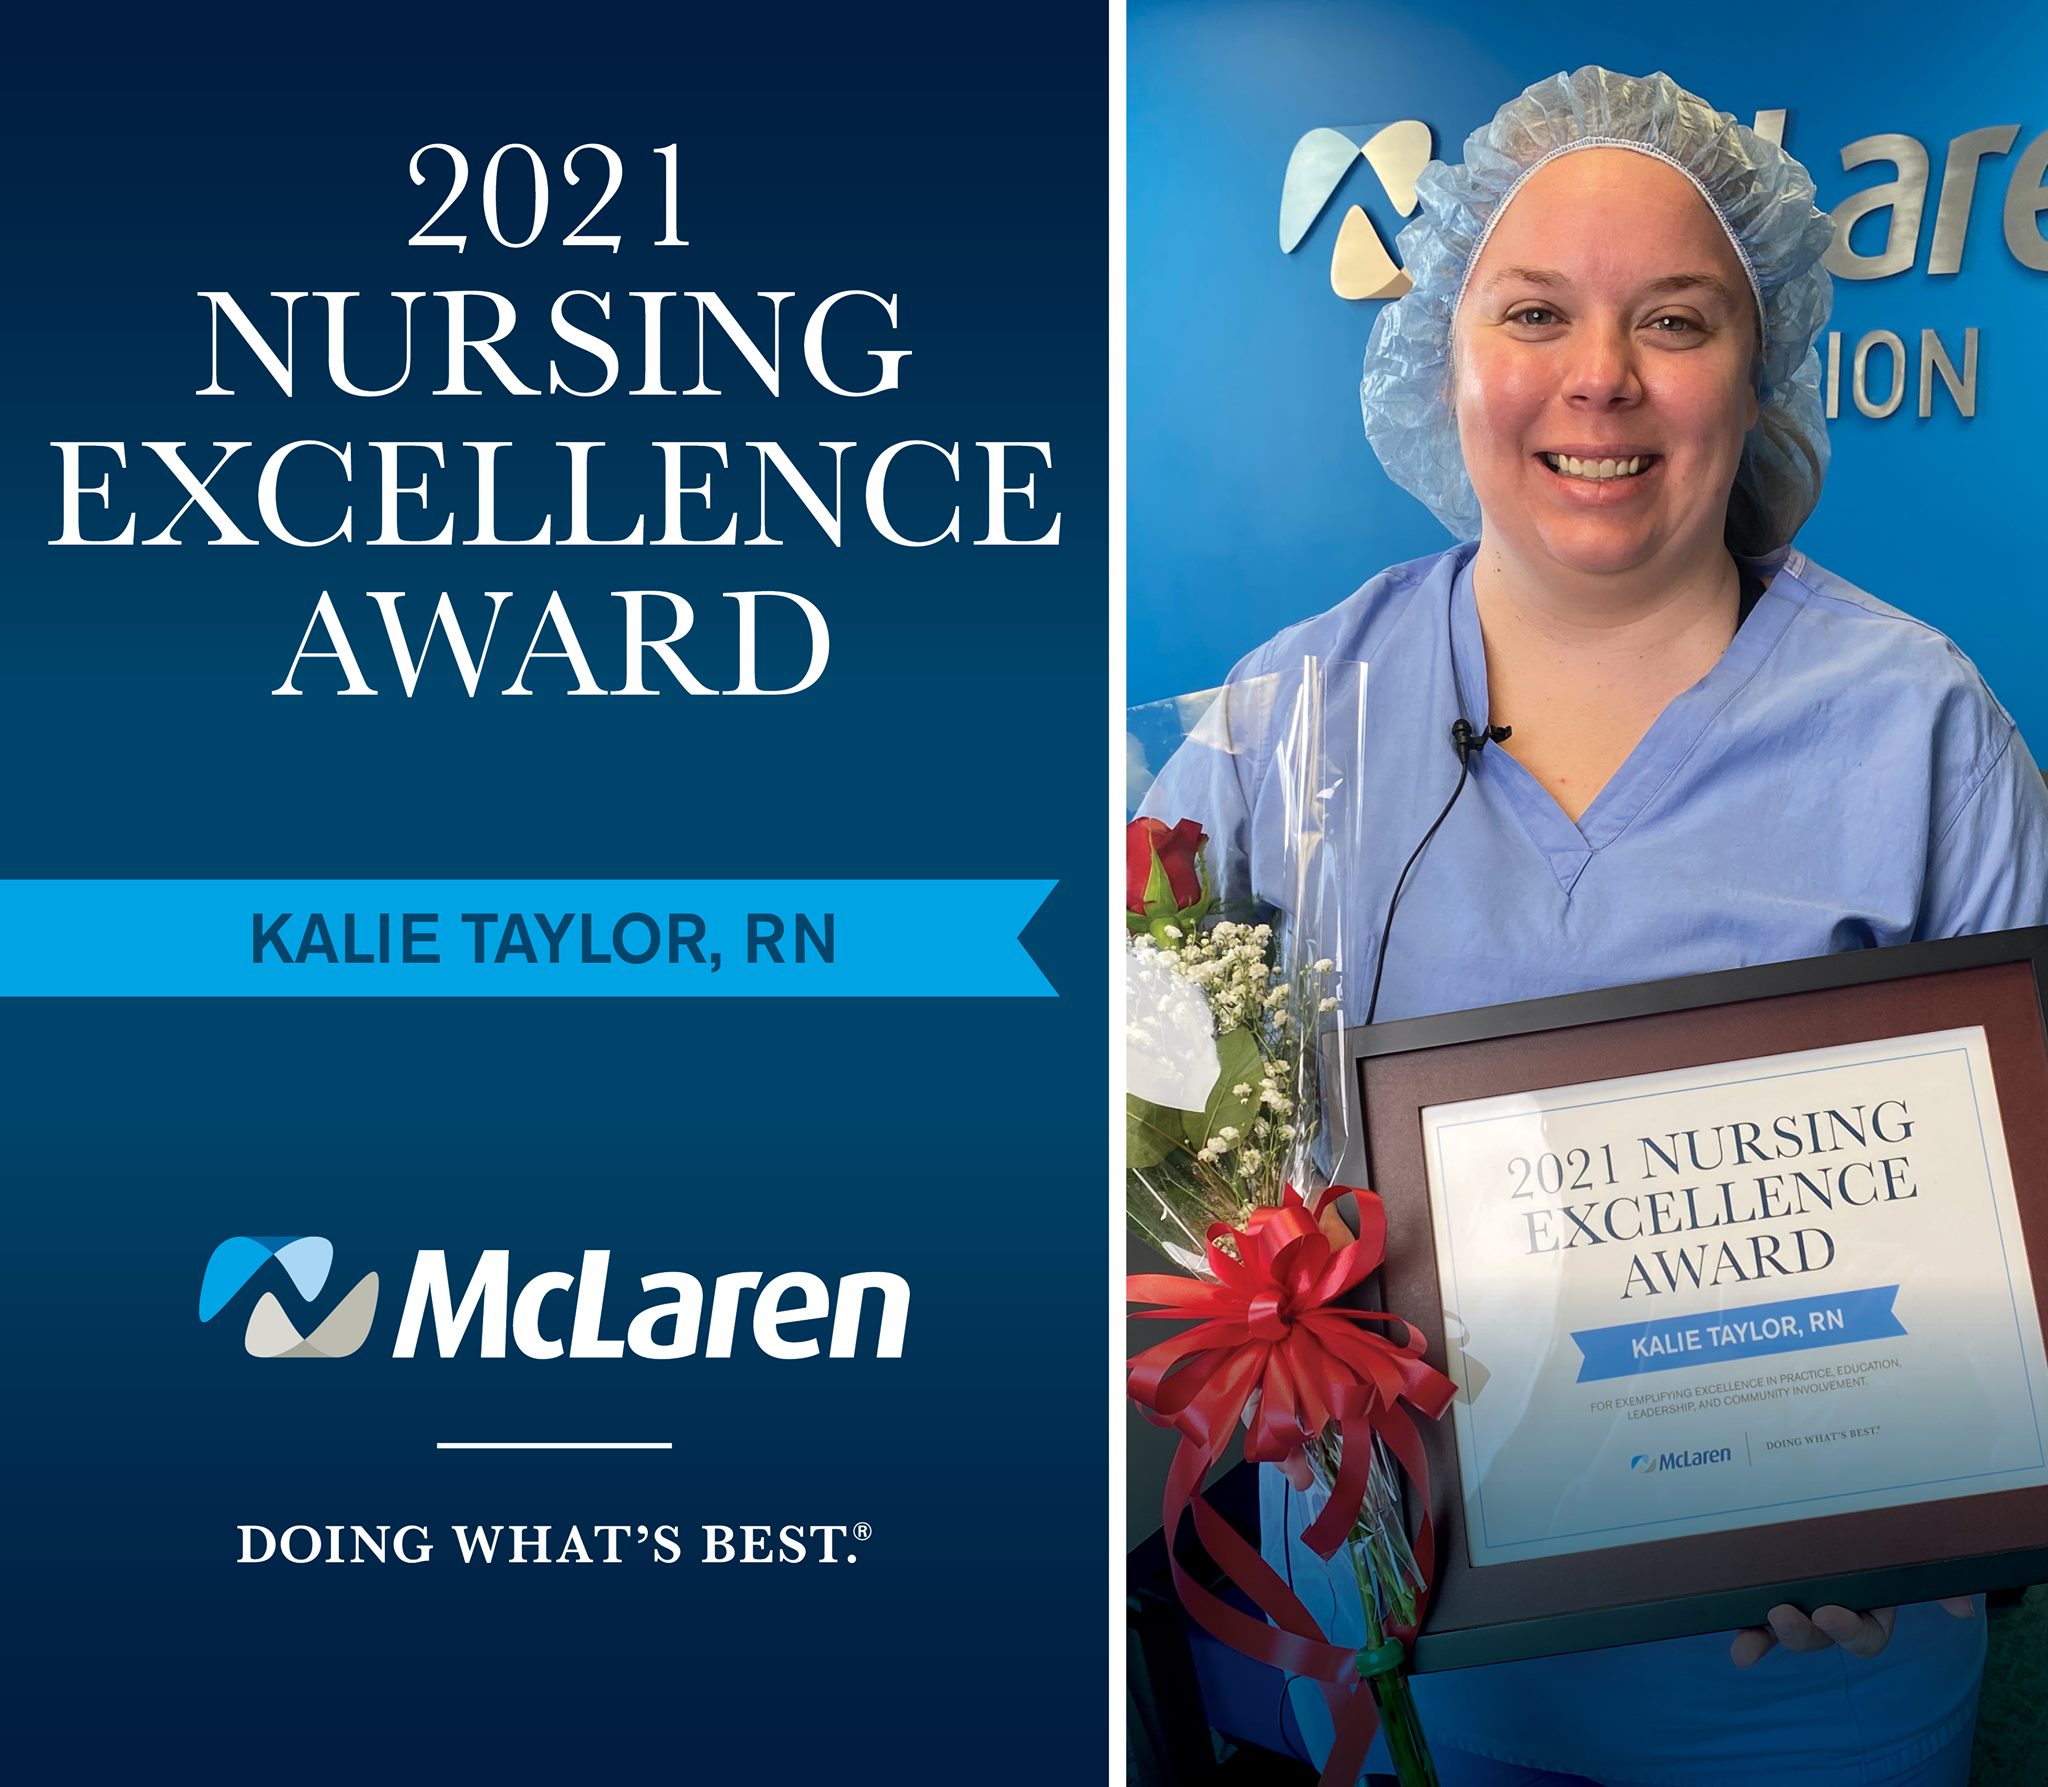 Kalie Taylor - 2021 Nursing Excellence Award recipient